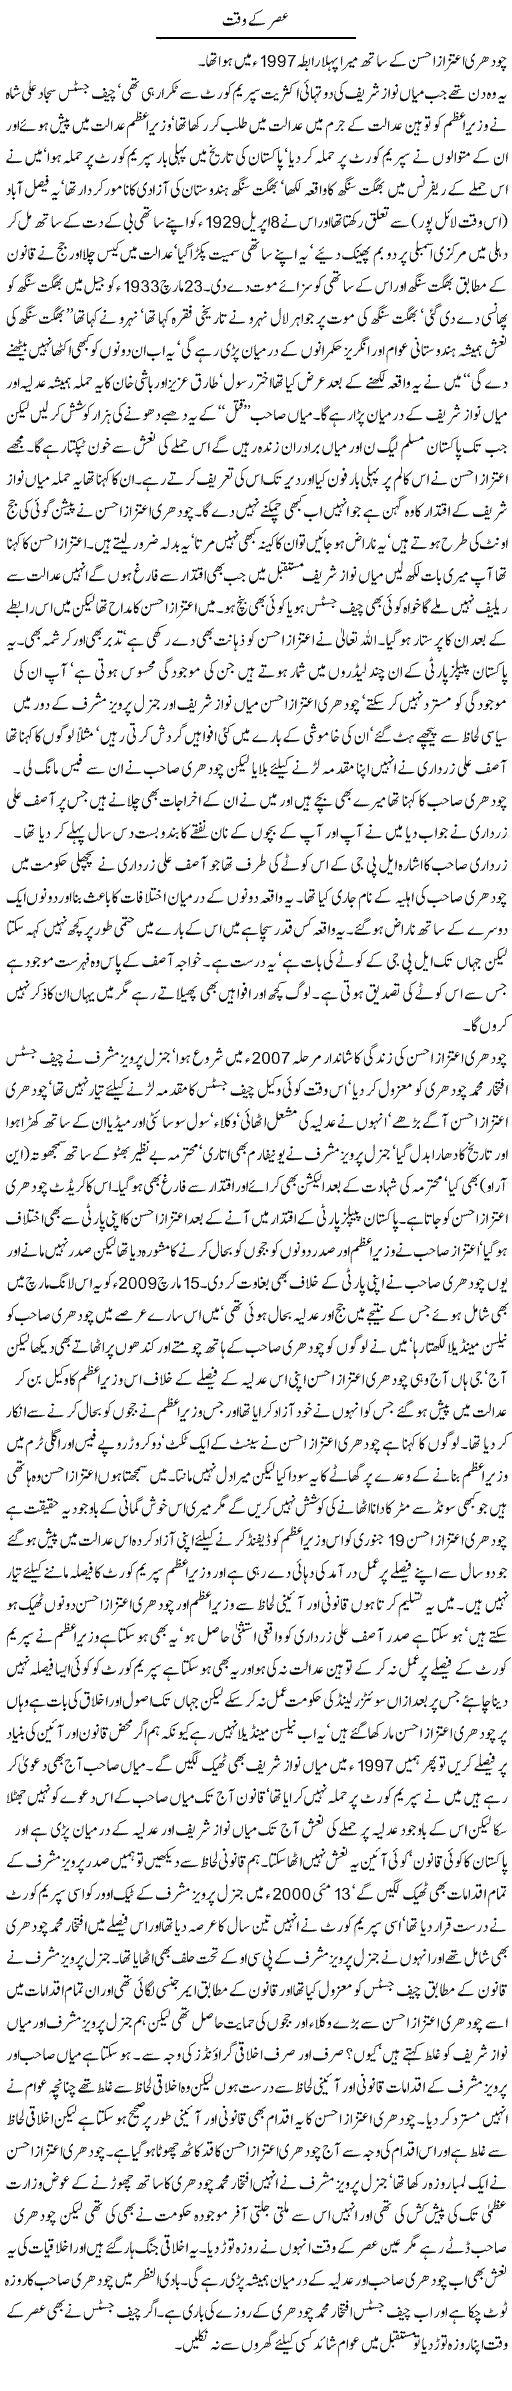 Ch Aitzaz Ahsan Express Column Javed Chaudhry 20 January 2012